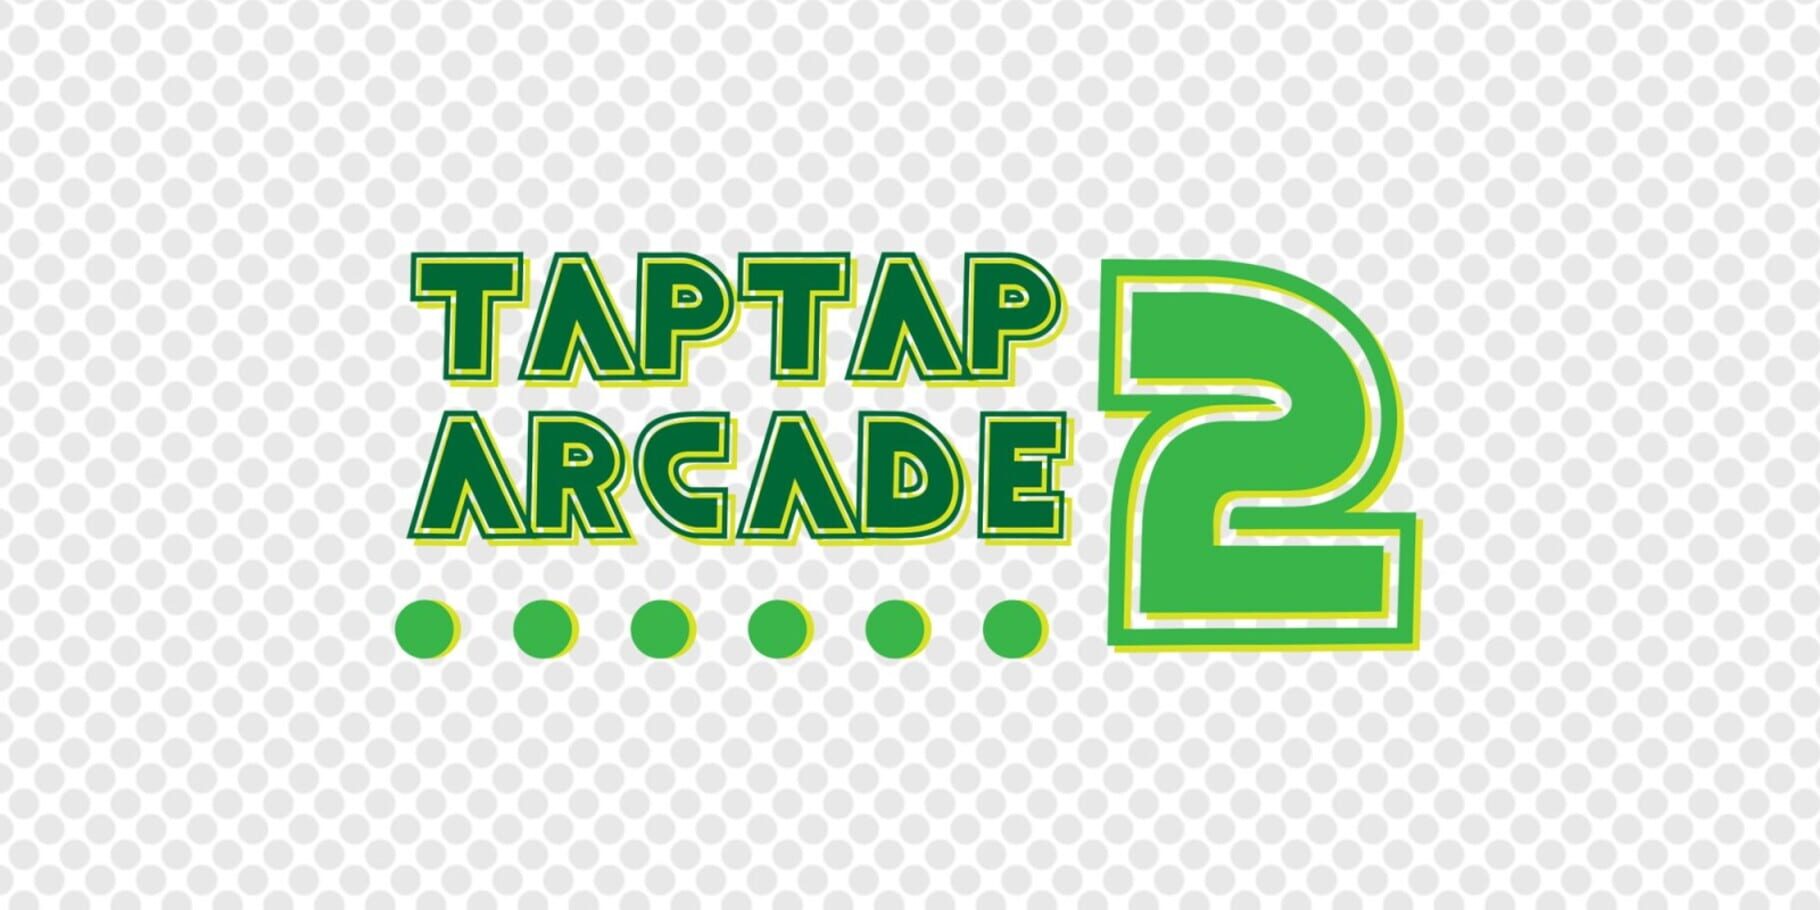 Tap Tap Arcade 2 Image